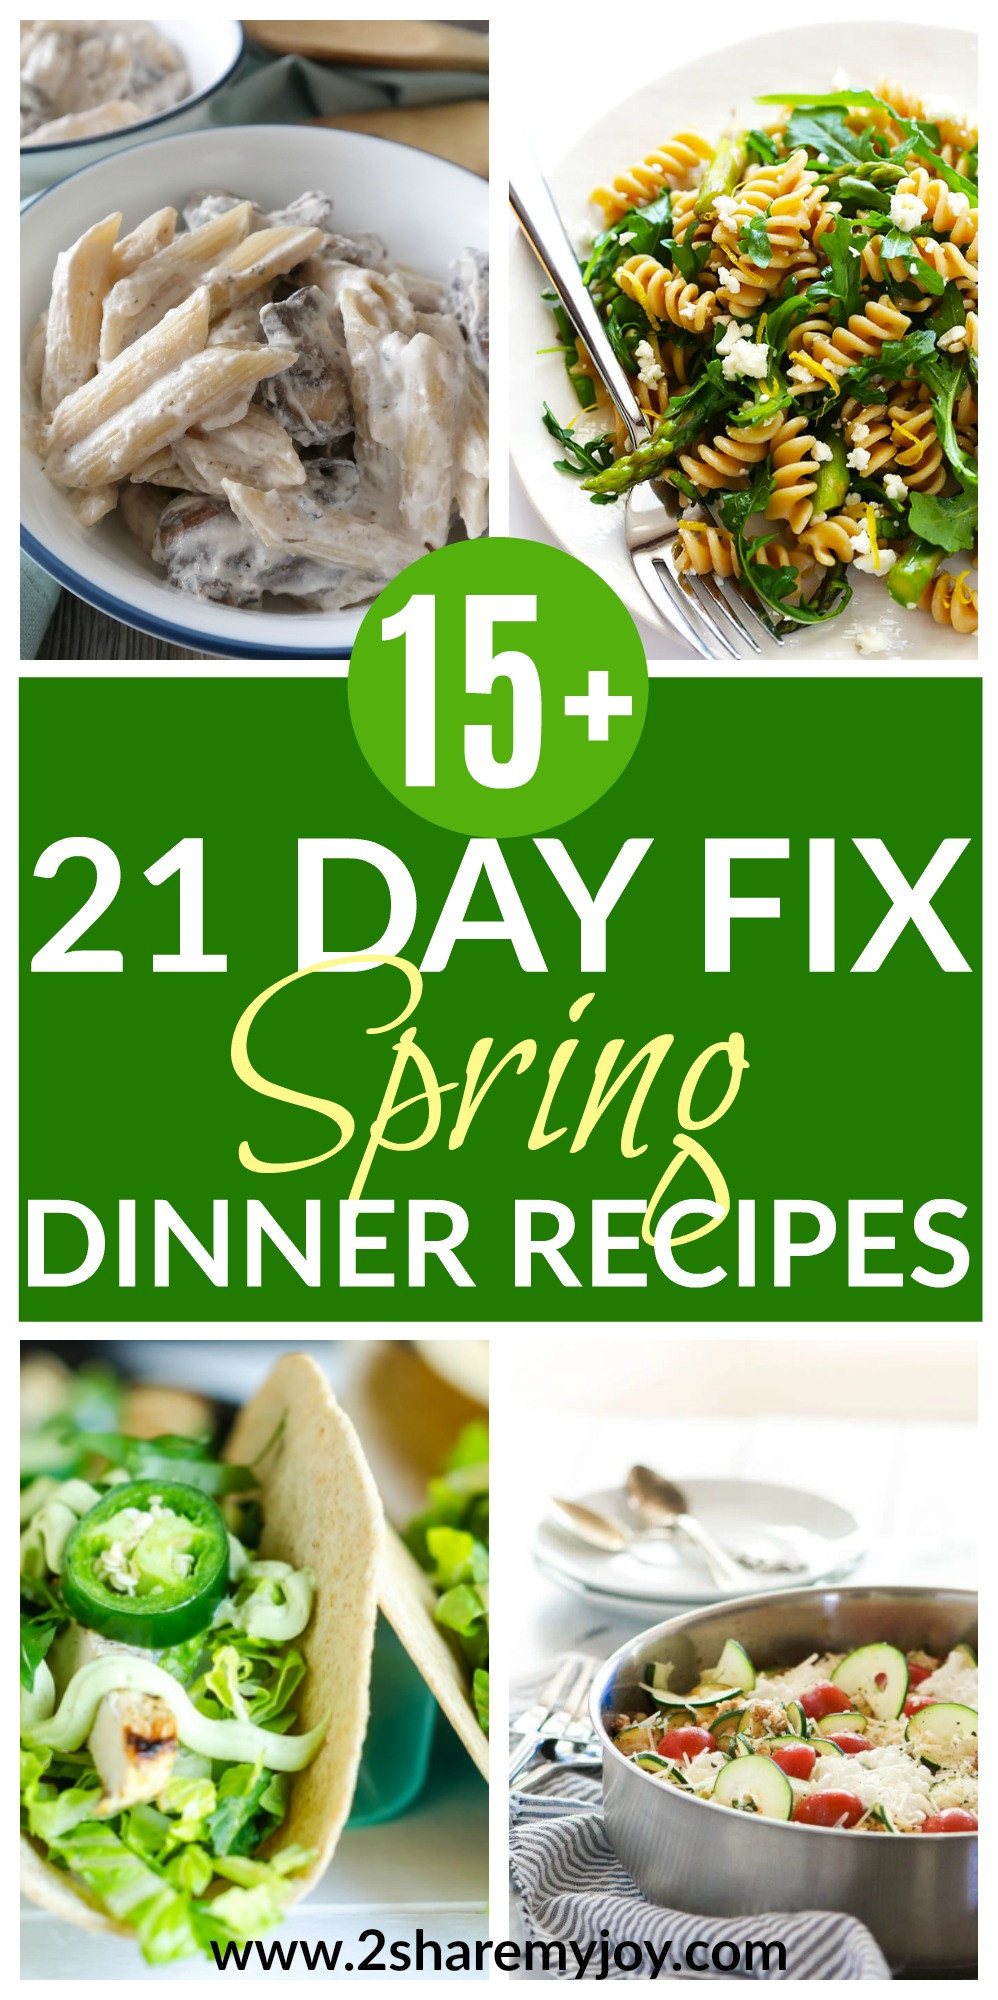 Spring Dinner Ideas
 21 Day Fix Spring Dinner Recipes also for summer